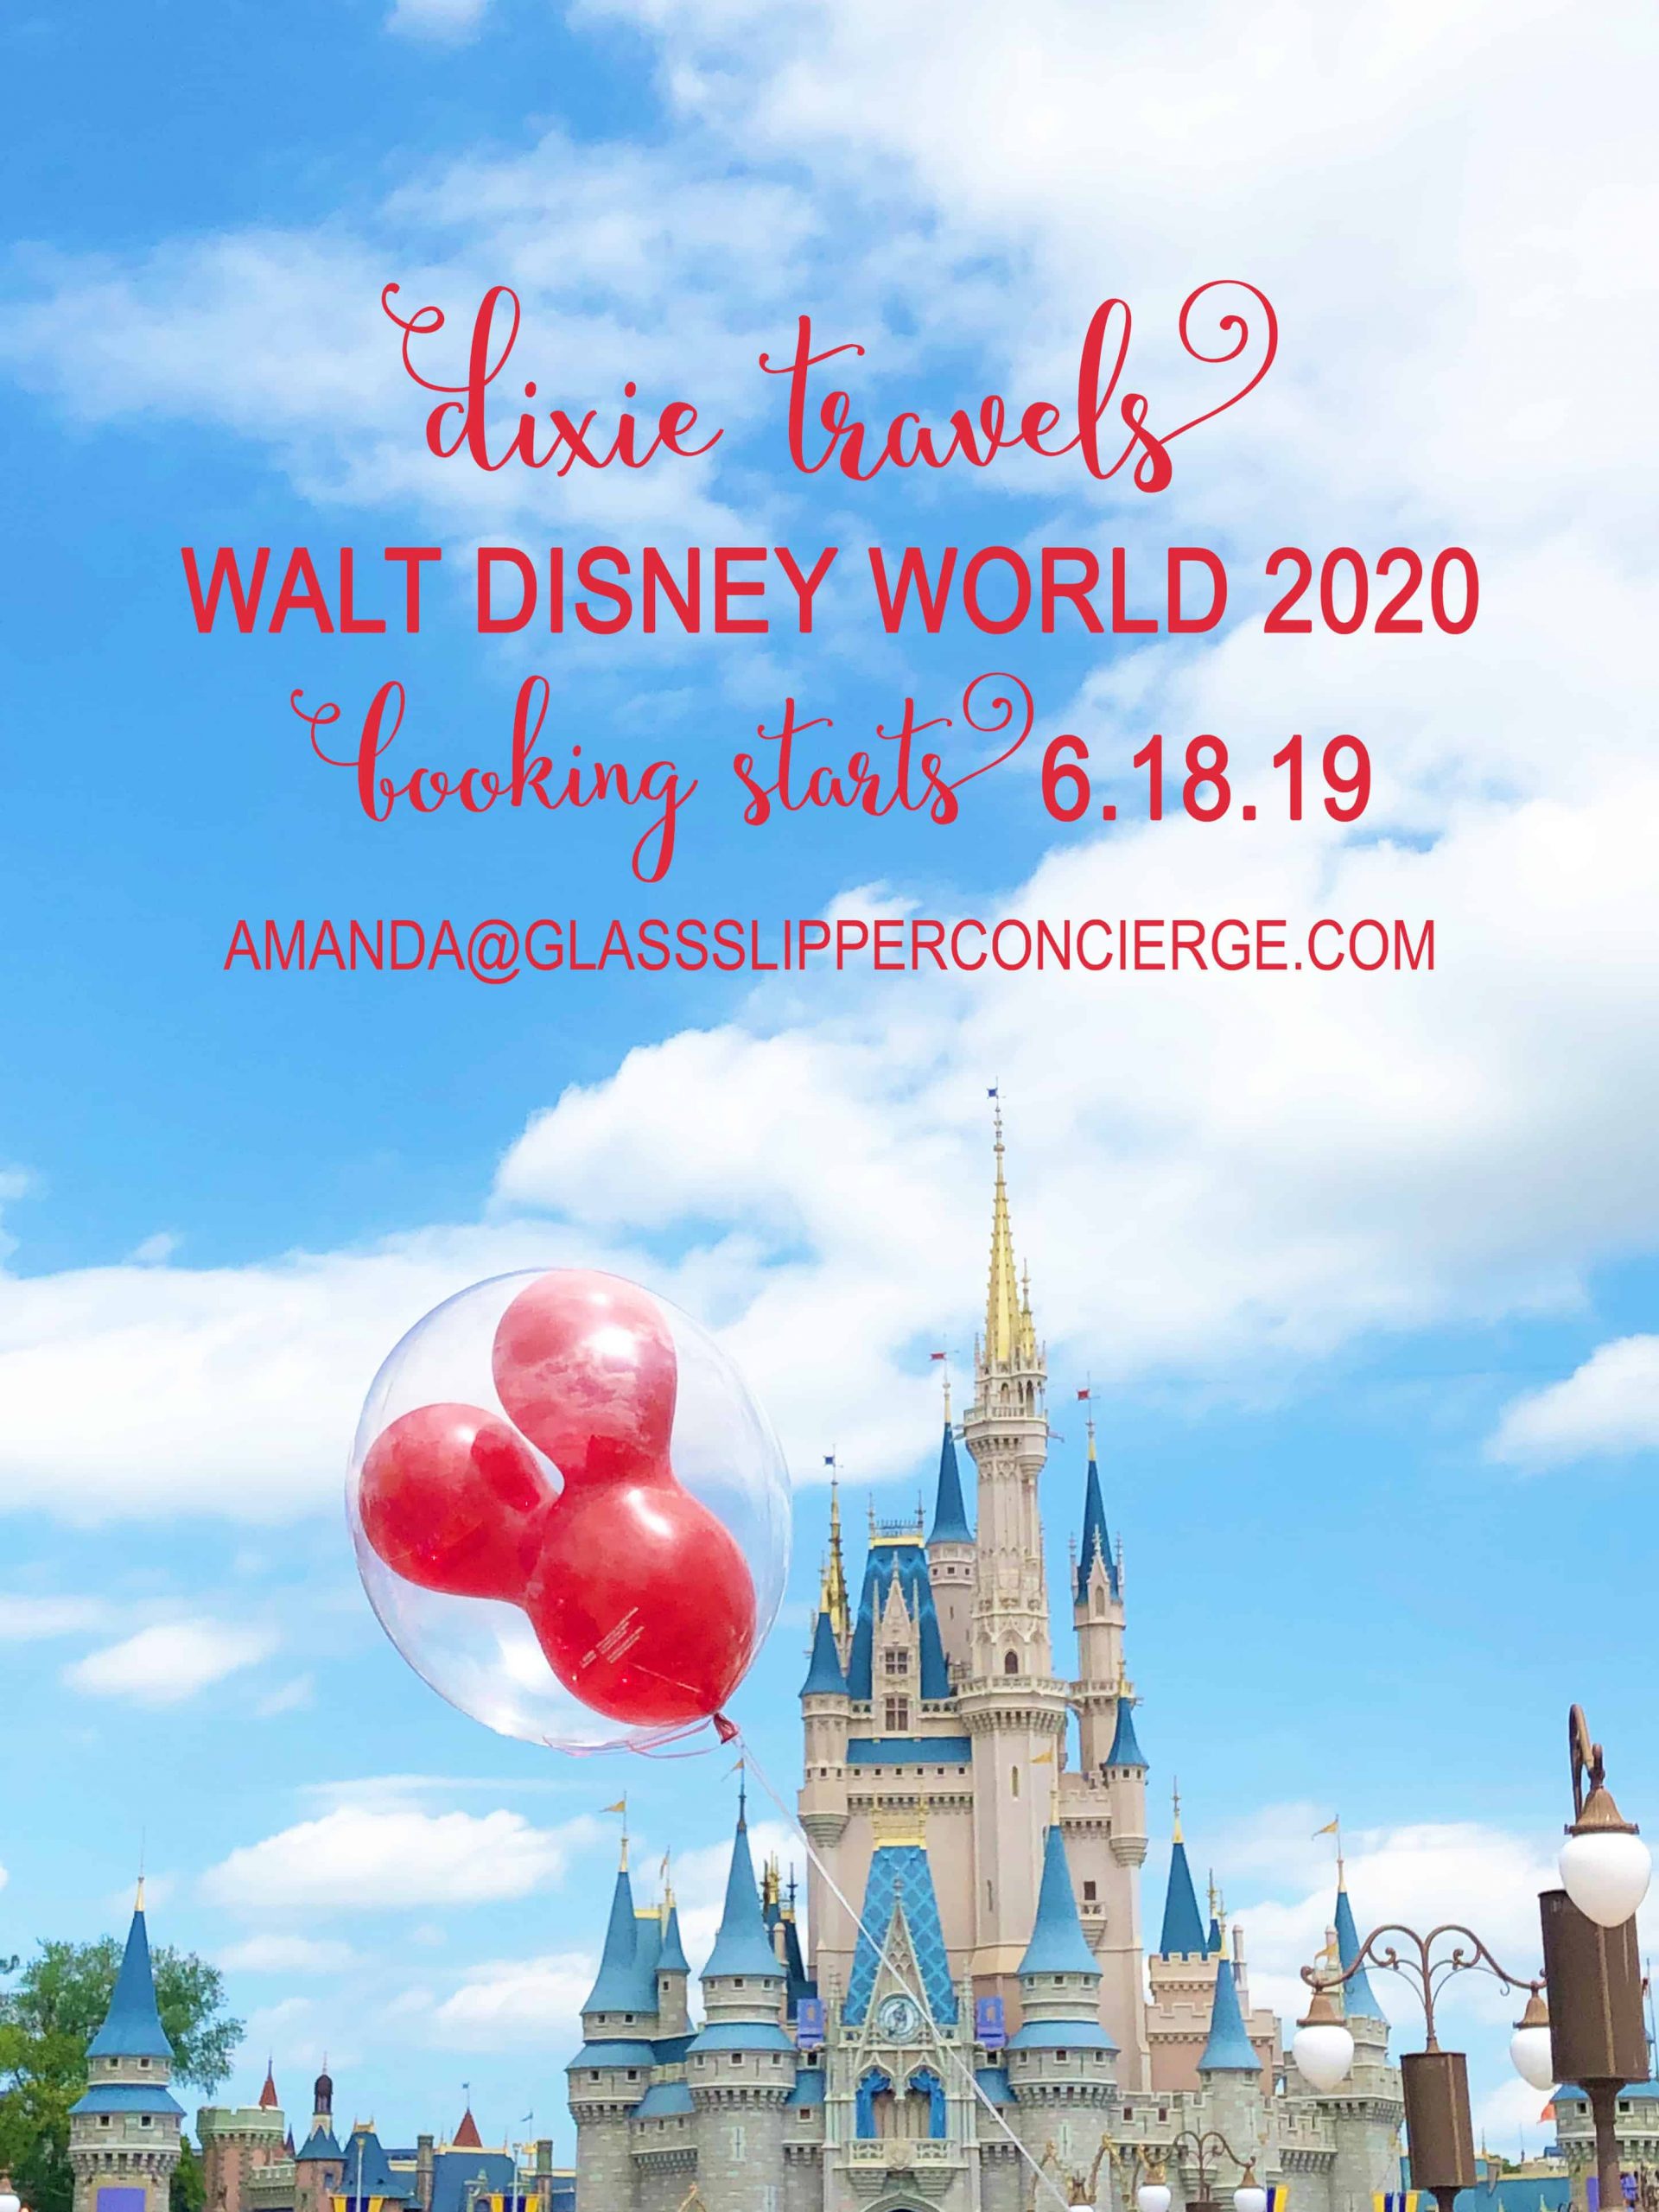 Walt Disney World 2020: Booking Opens June 18 – Dixie Delights